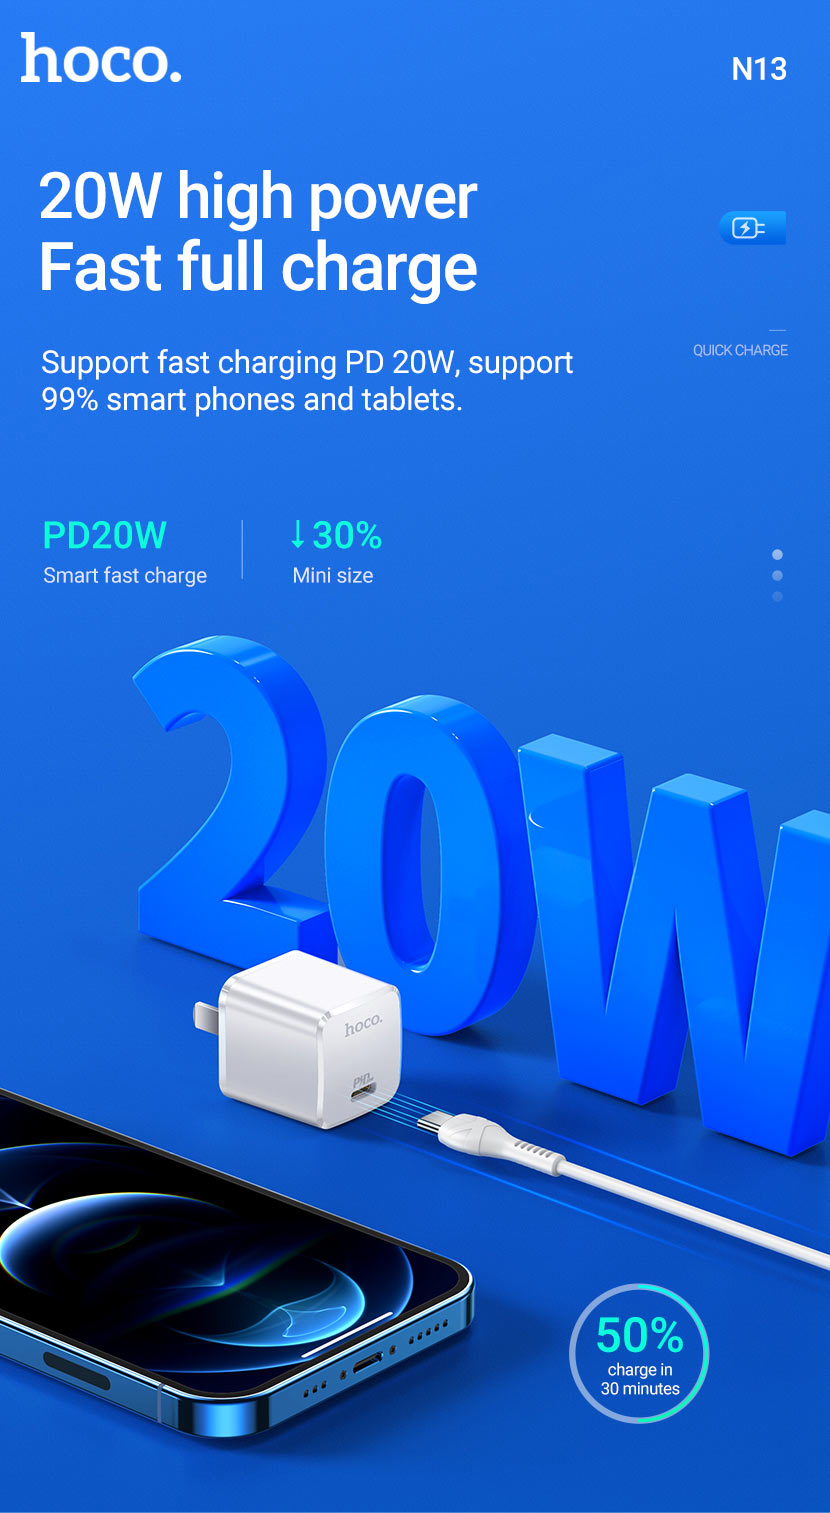 hoco news n10 n13 starter single port pd20w wall charger high power en